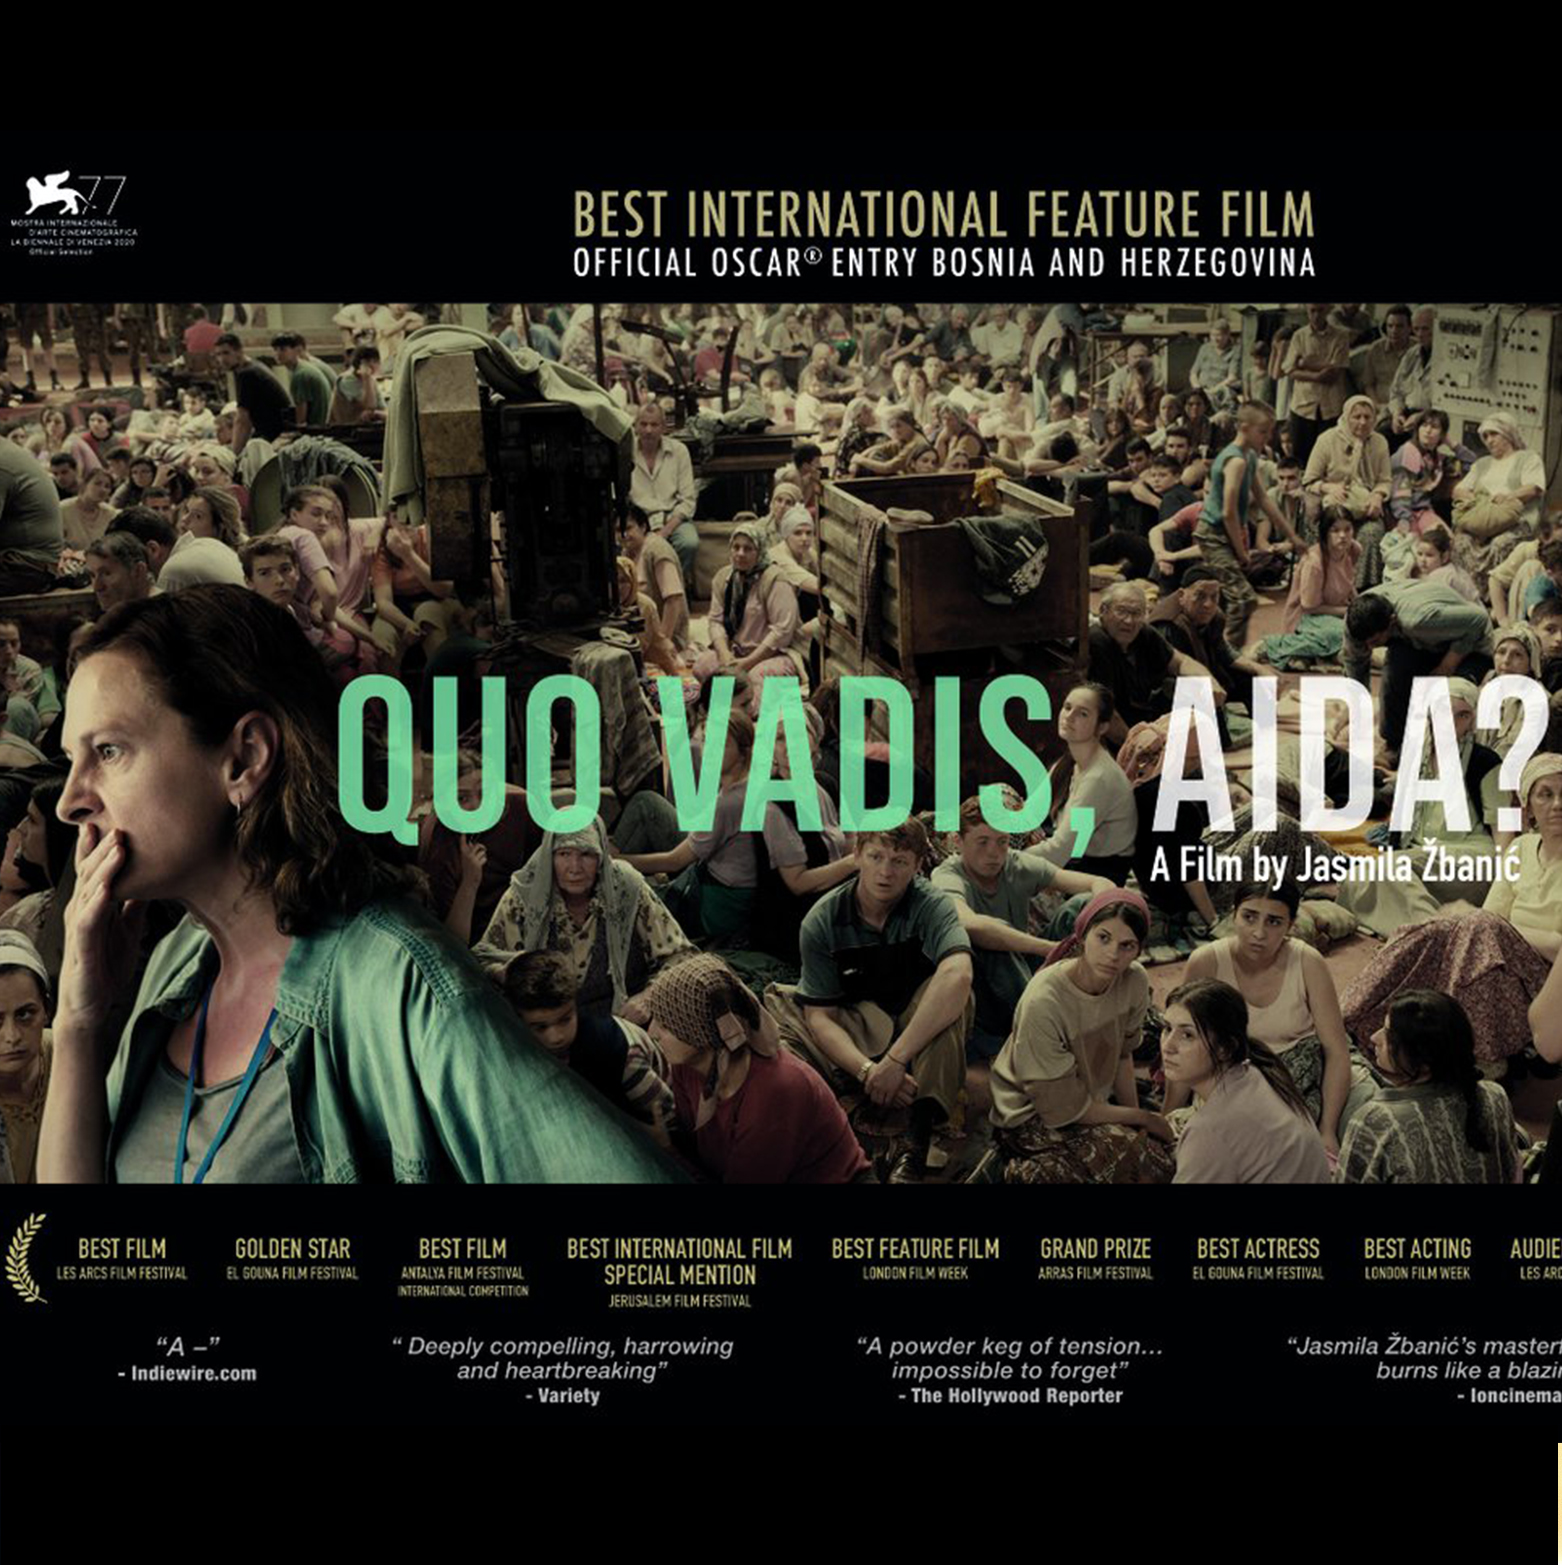 The film “Quo Vadis Aida?” starring Jasna Djuricic and Boris Isakovic